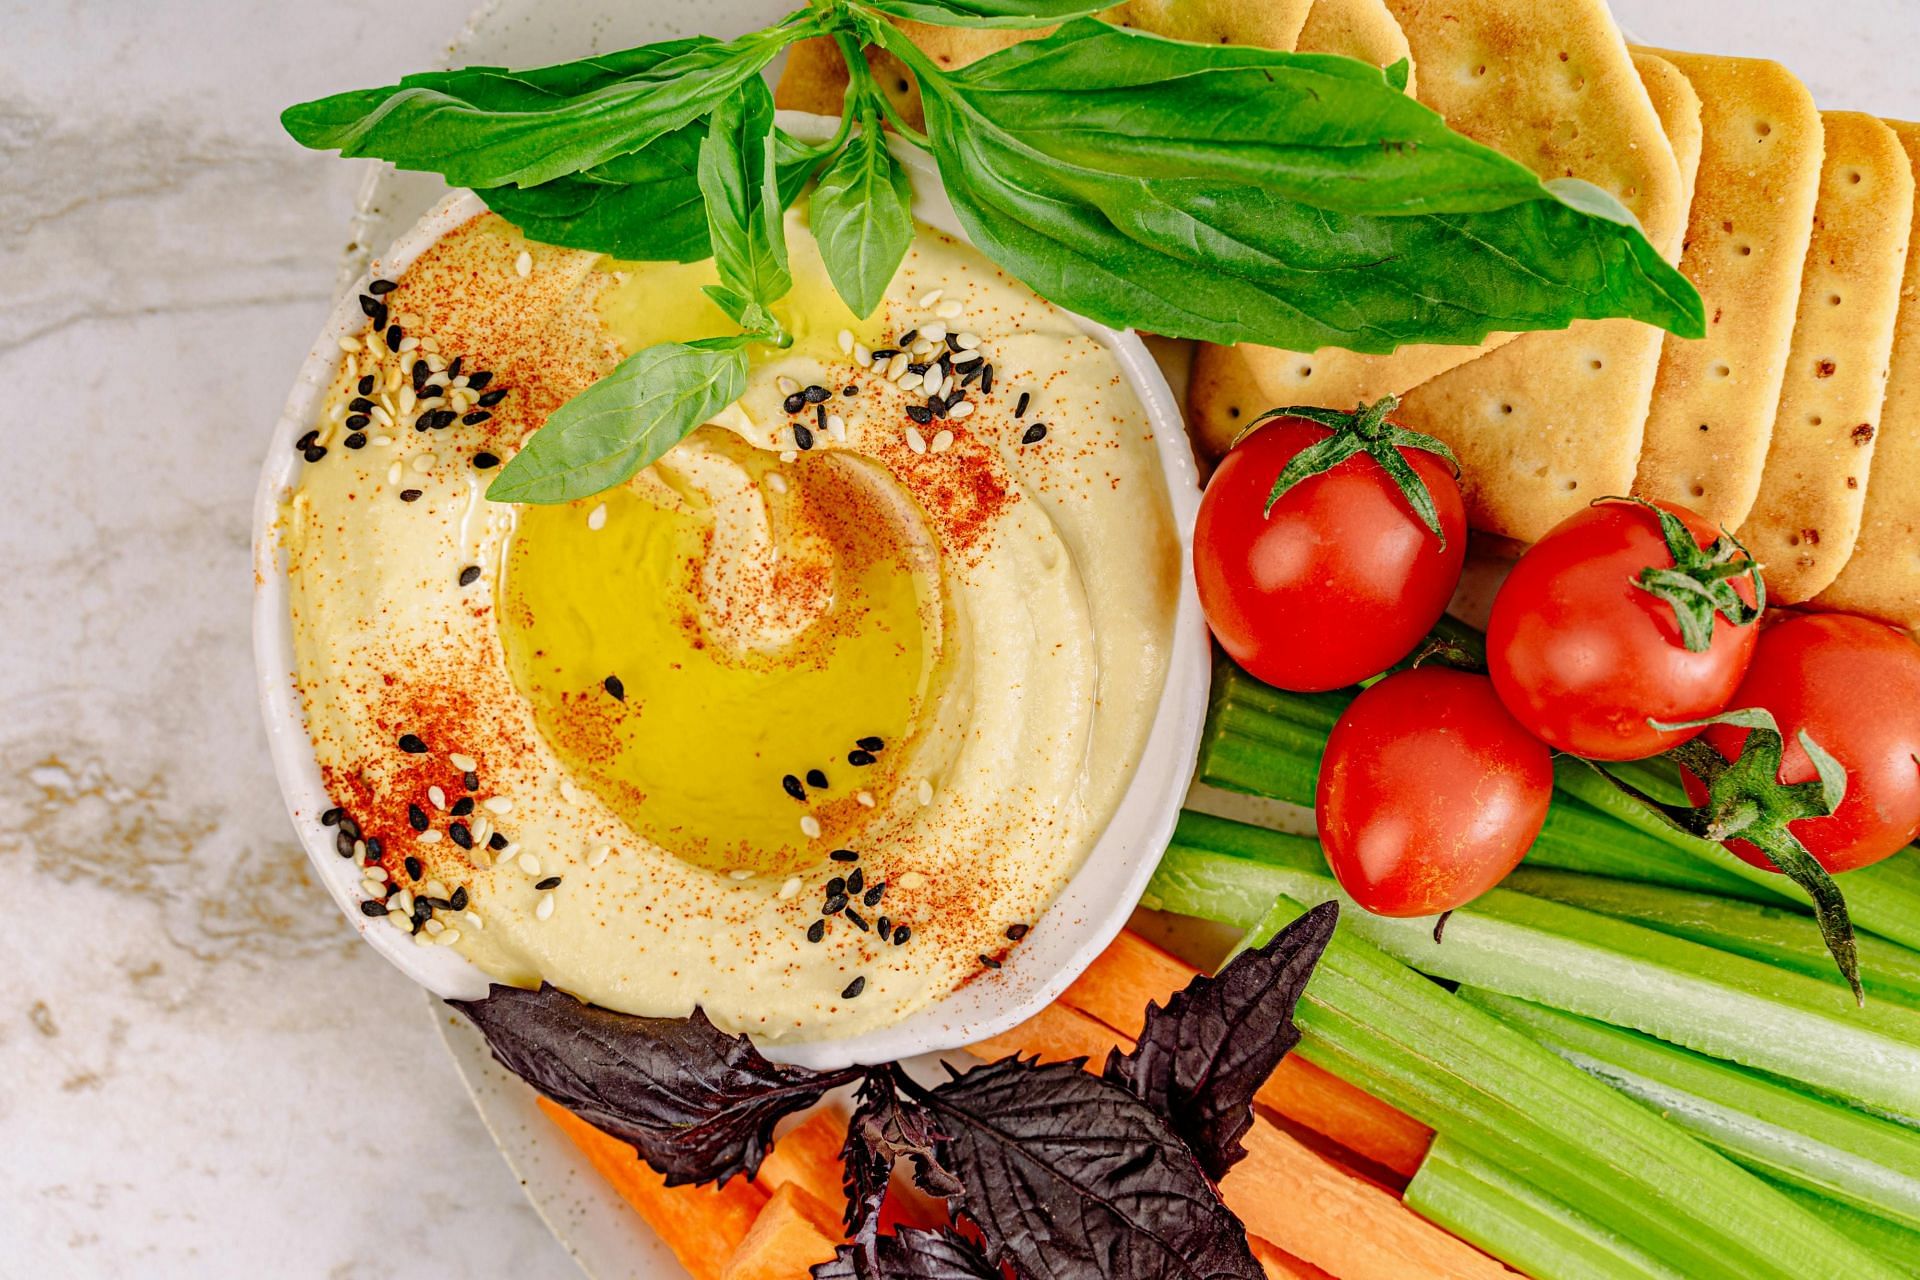 Healthy hummus recipe (image sourced via Pexels / Photo by antoni)